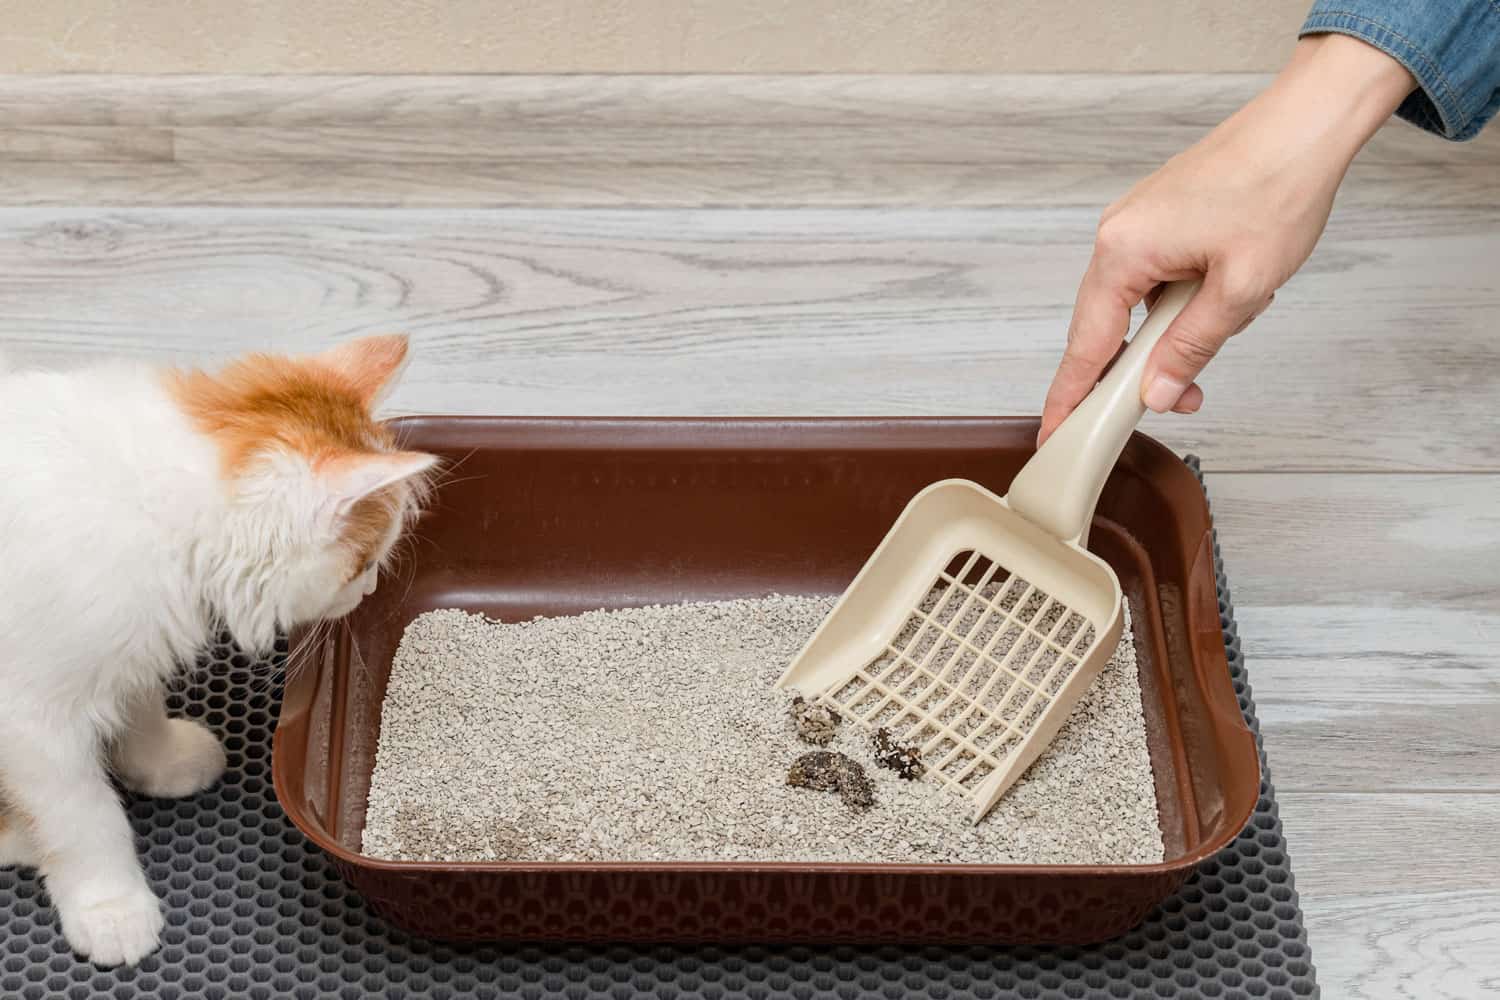 Owner scooping cat poo